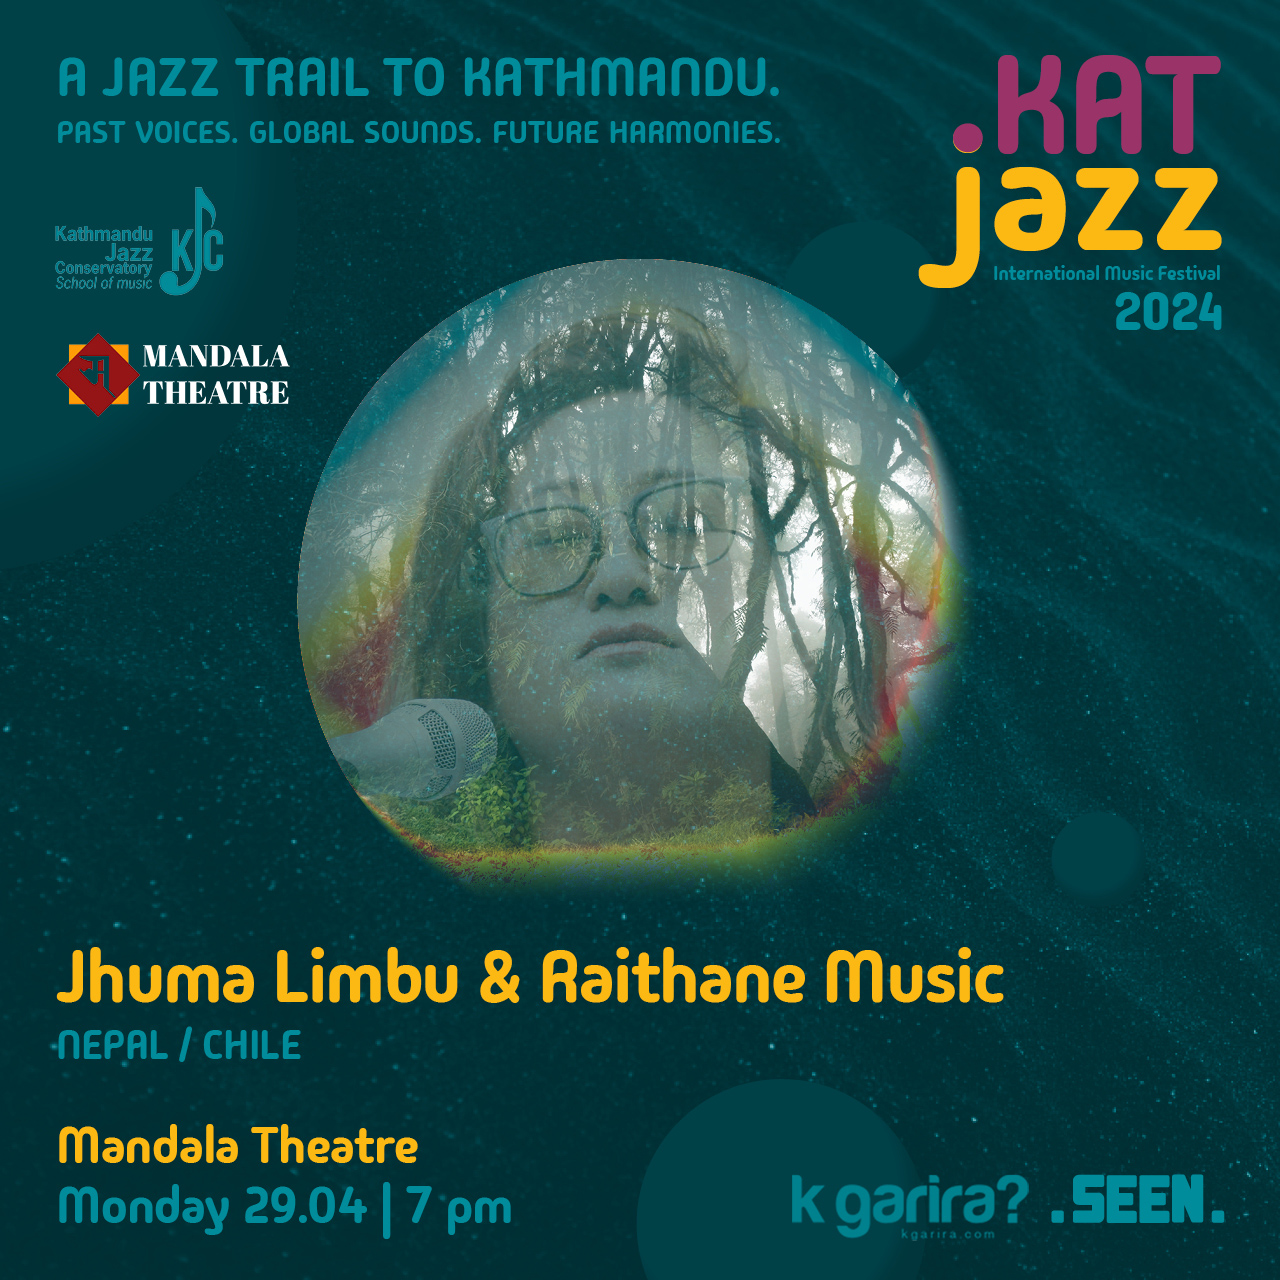 Kat Jazz - Jhuma Limbu & Raithane Music